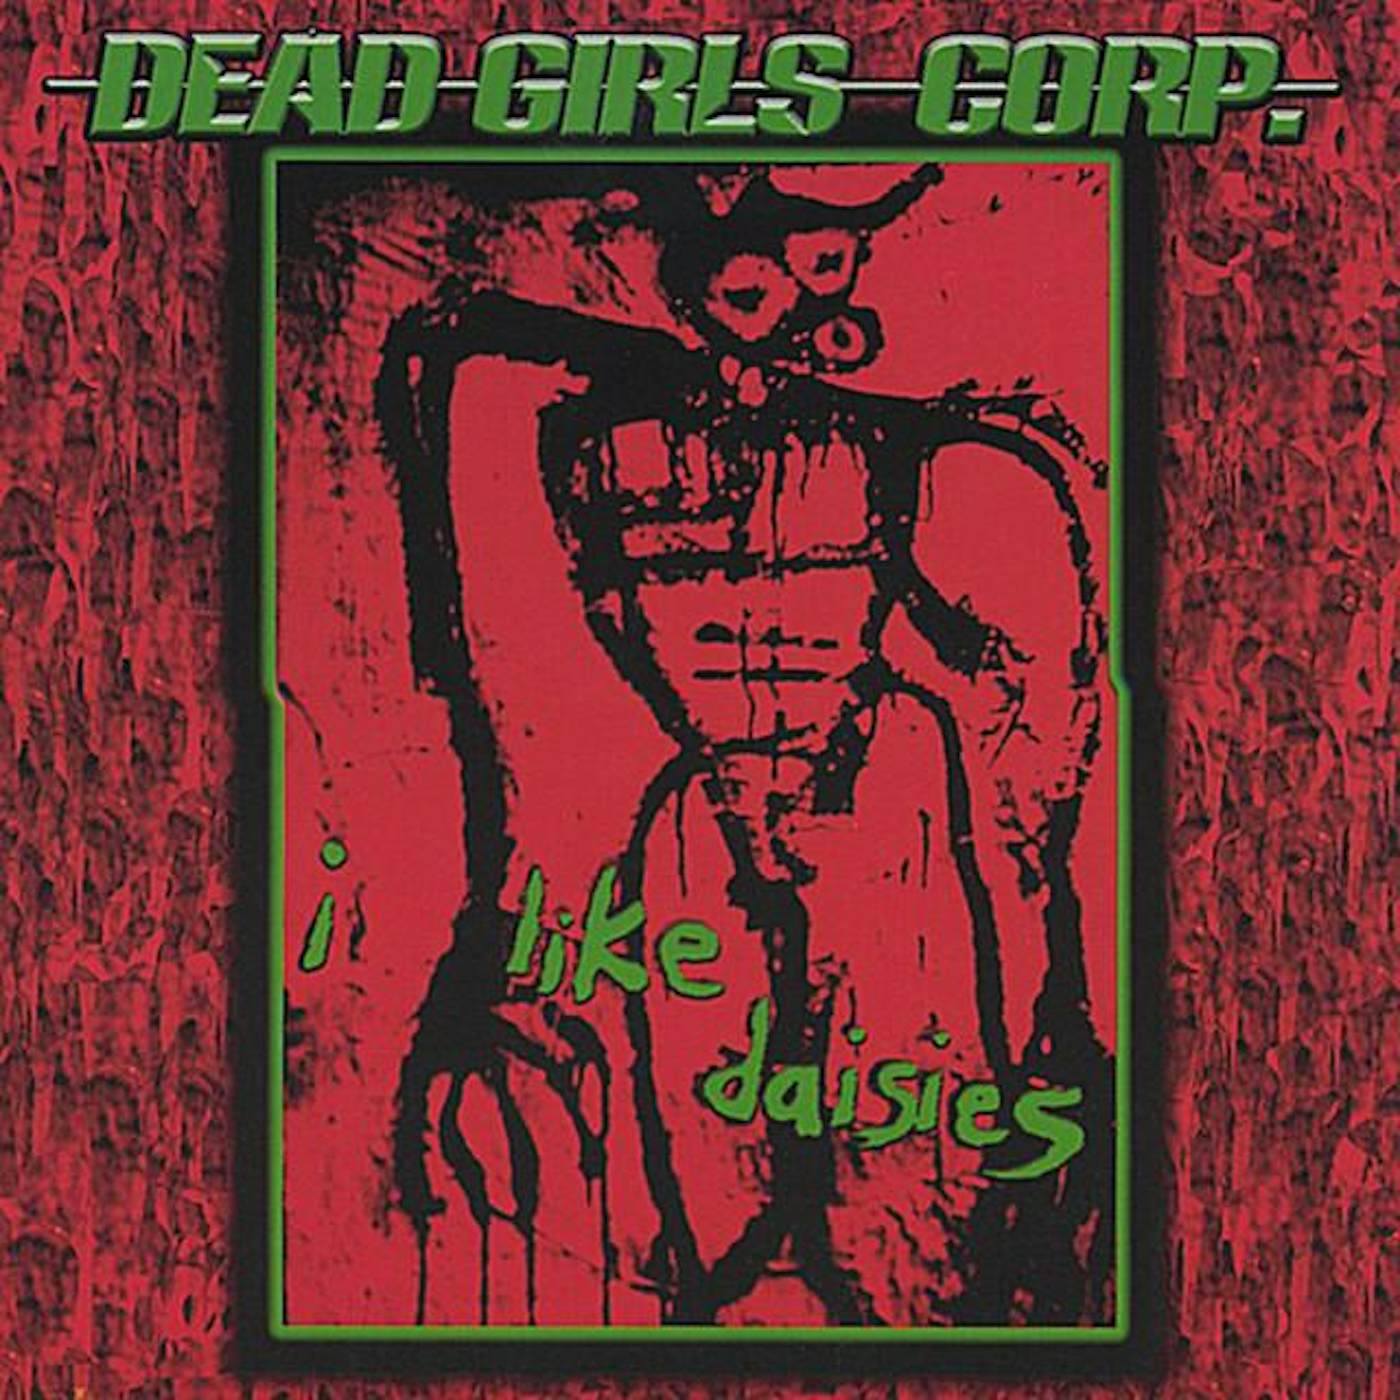 Dead Girls Corp.